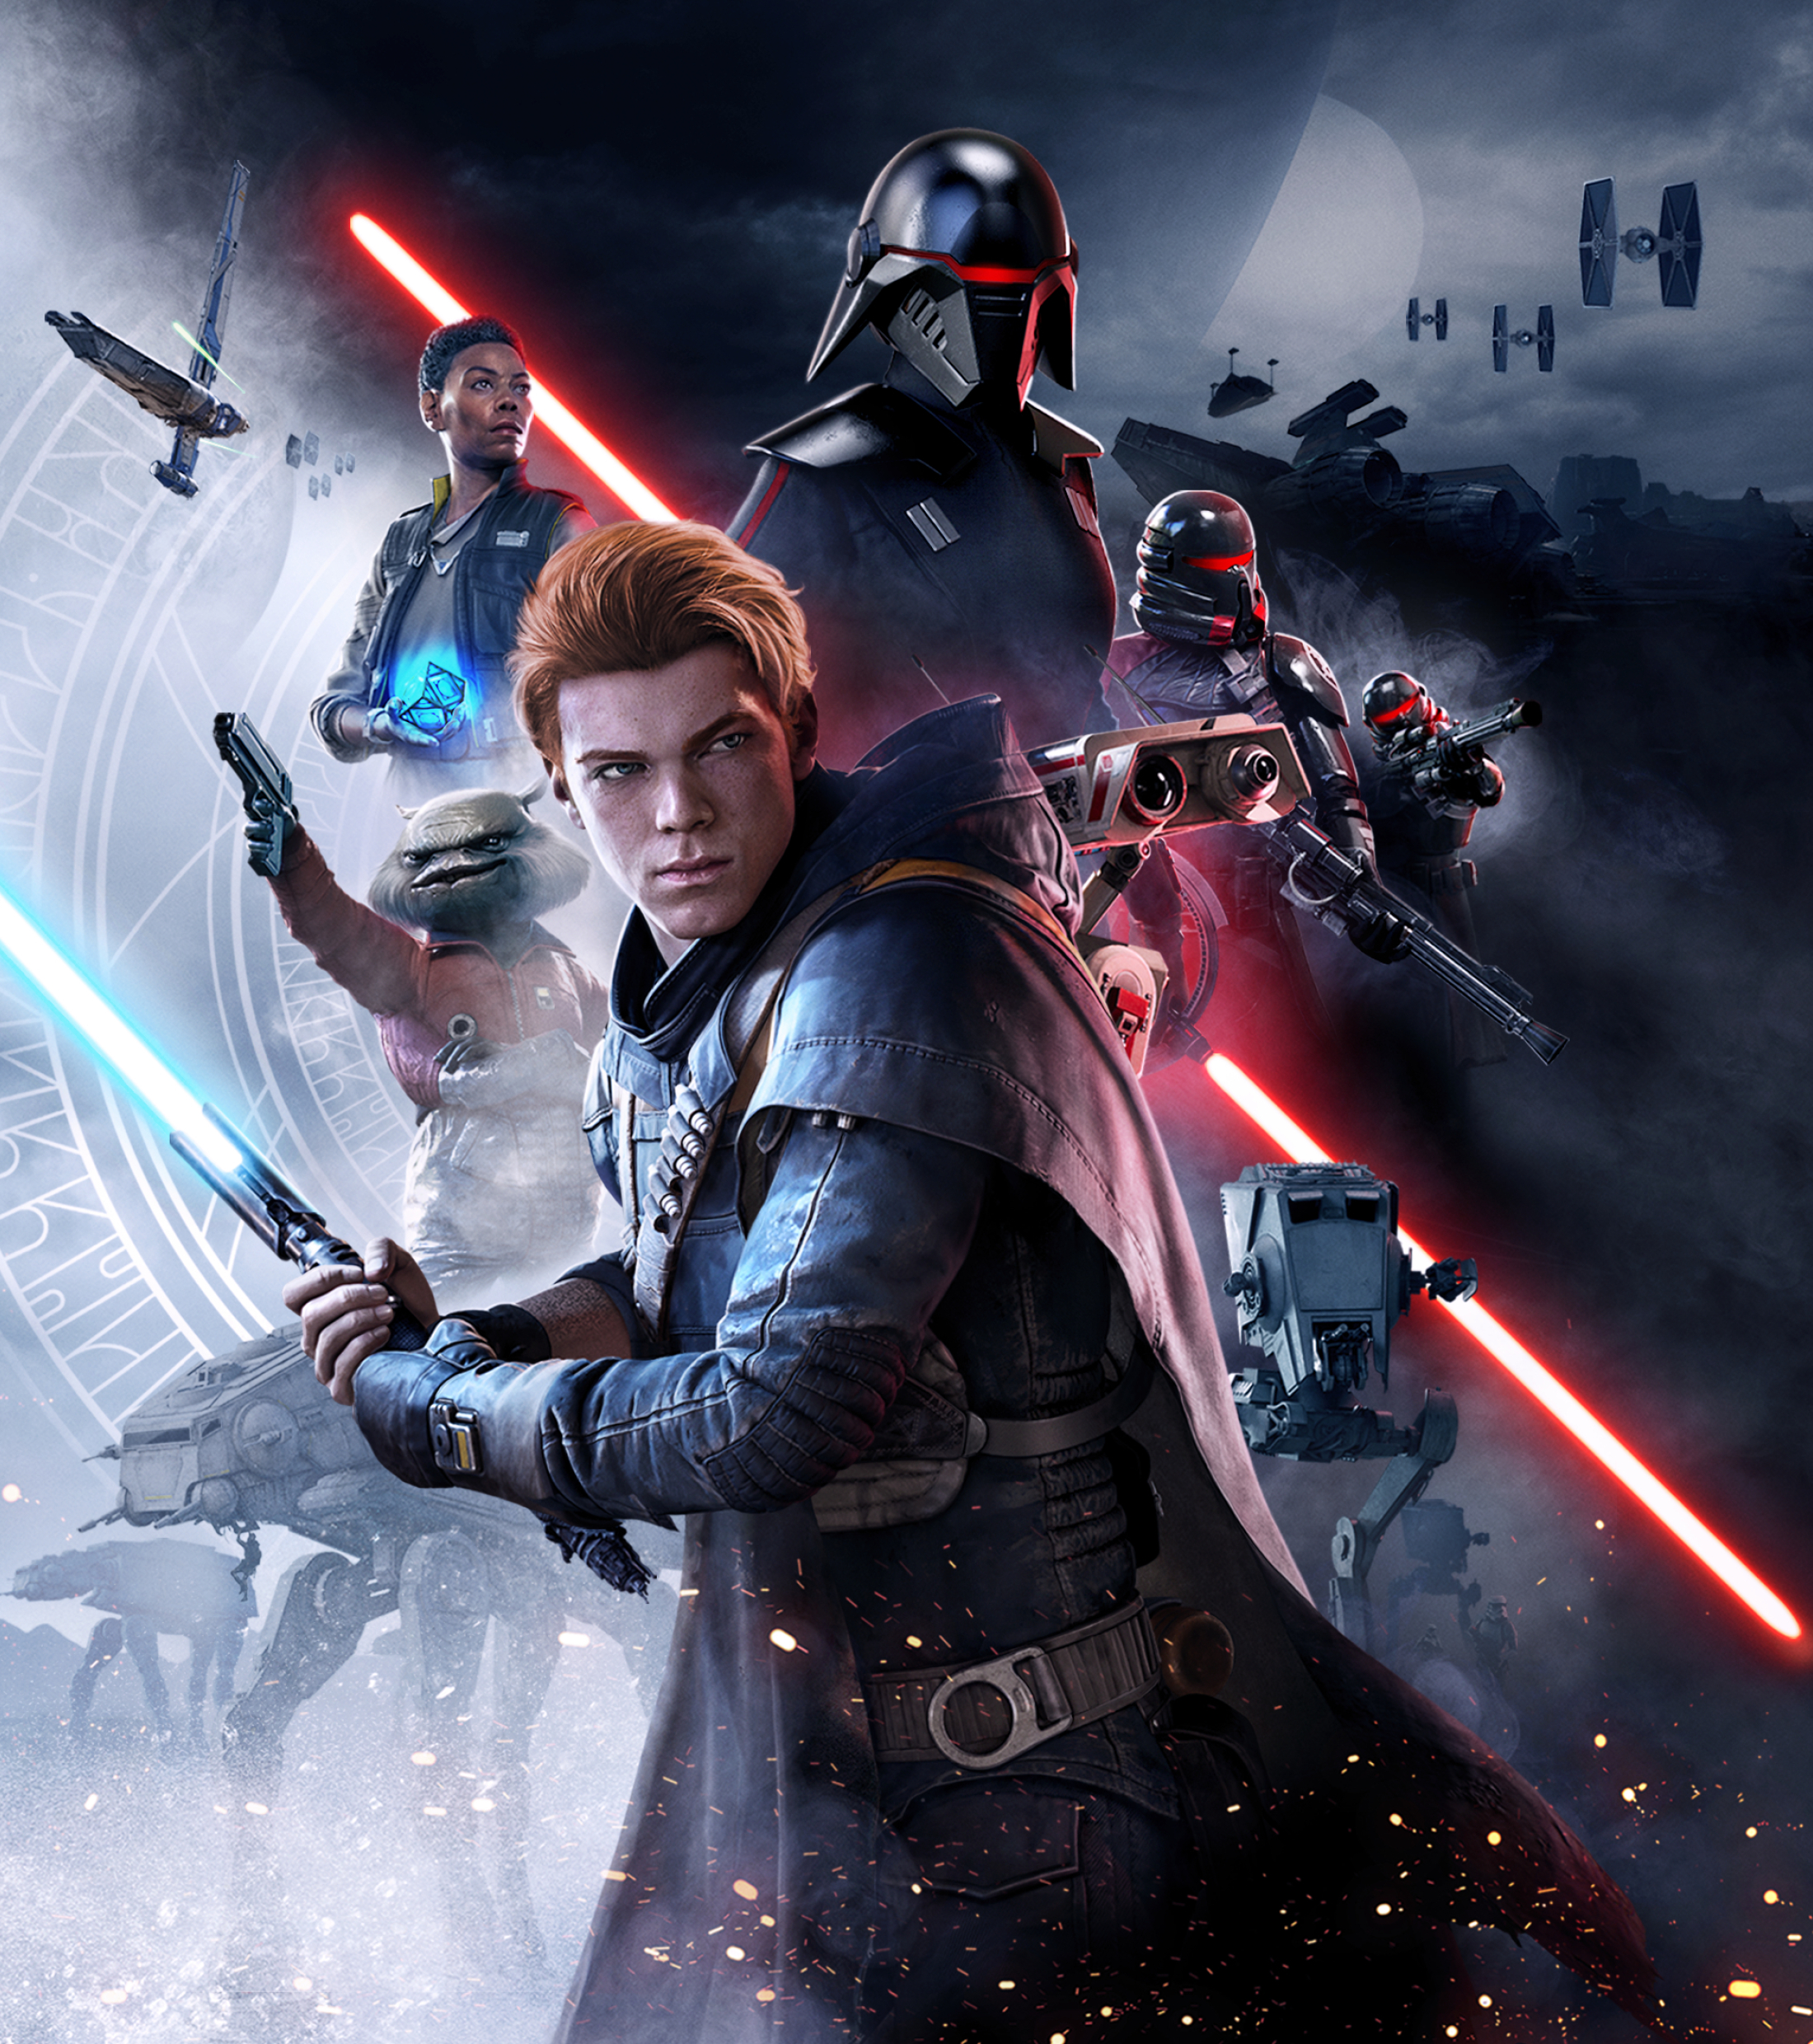 Star wars jedi 1. Star Wars 2019 игра. Звёздные войны джедаи: Павший орден. Звёздные войны Павший орден. Star Wars Jedi Fallen.